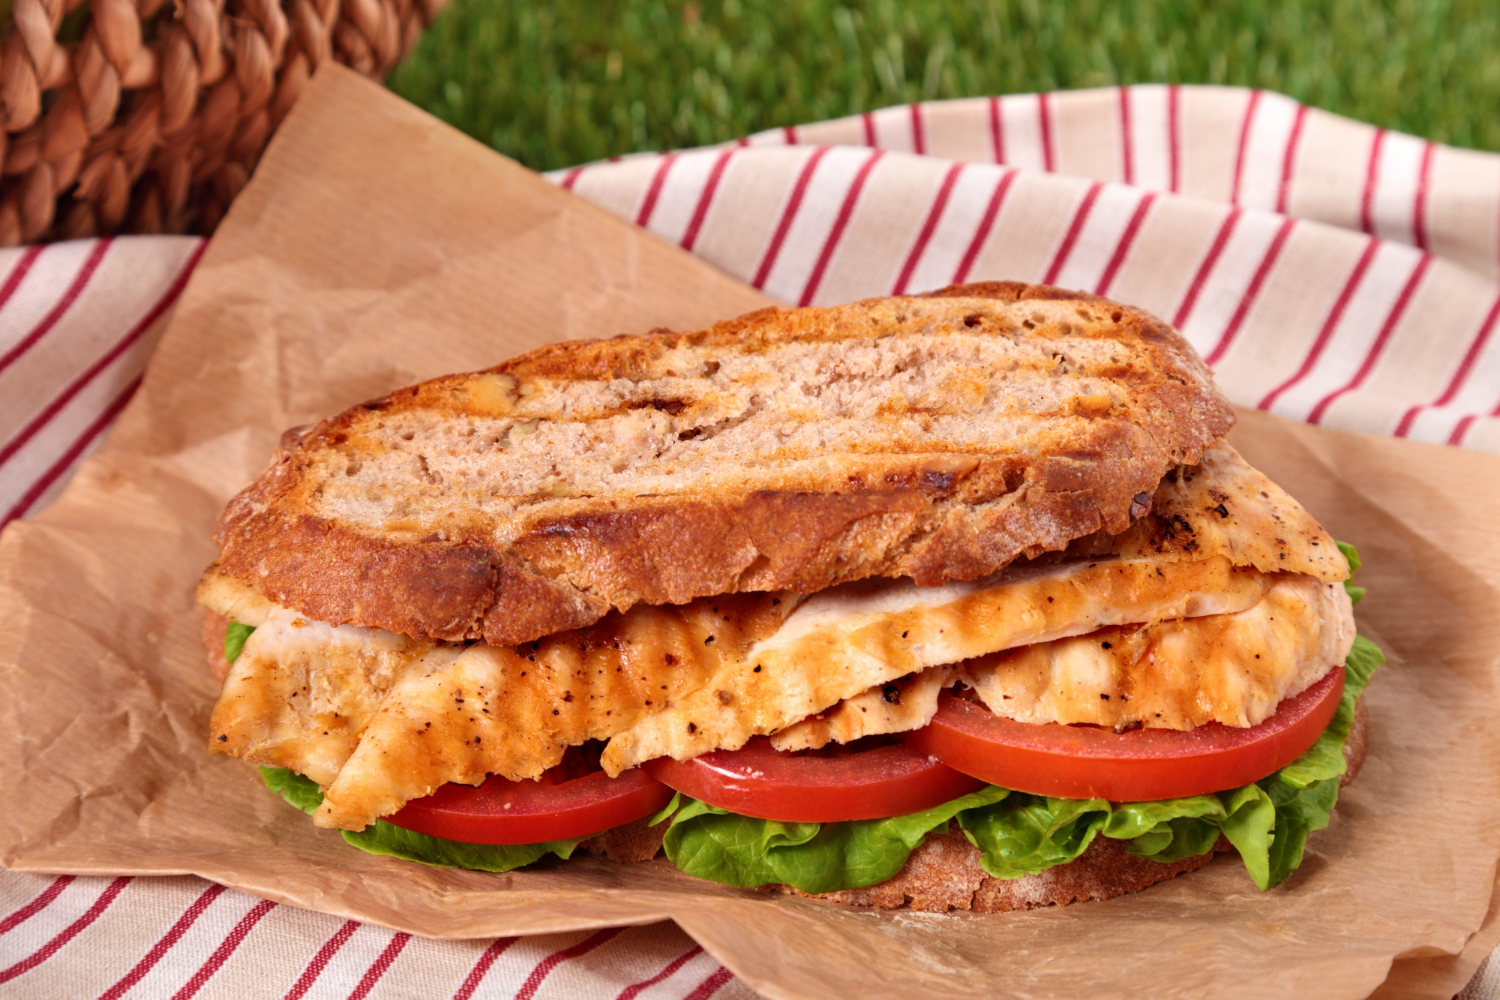 Saboreie um sanduíche nutritivo e delicioso de frango e passas